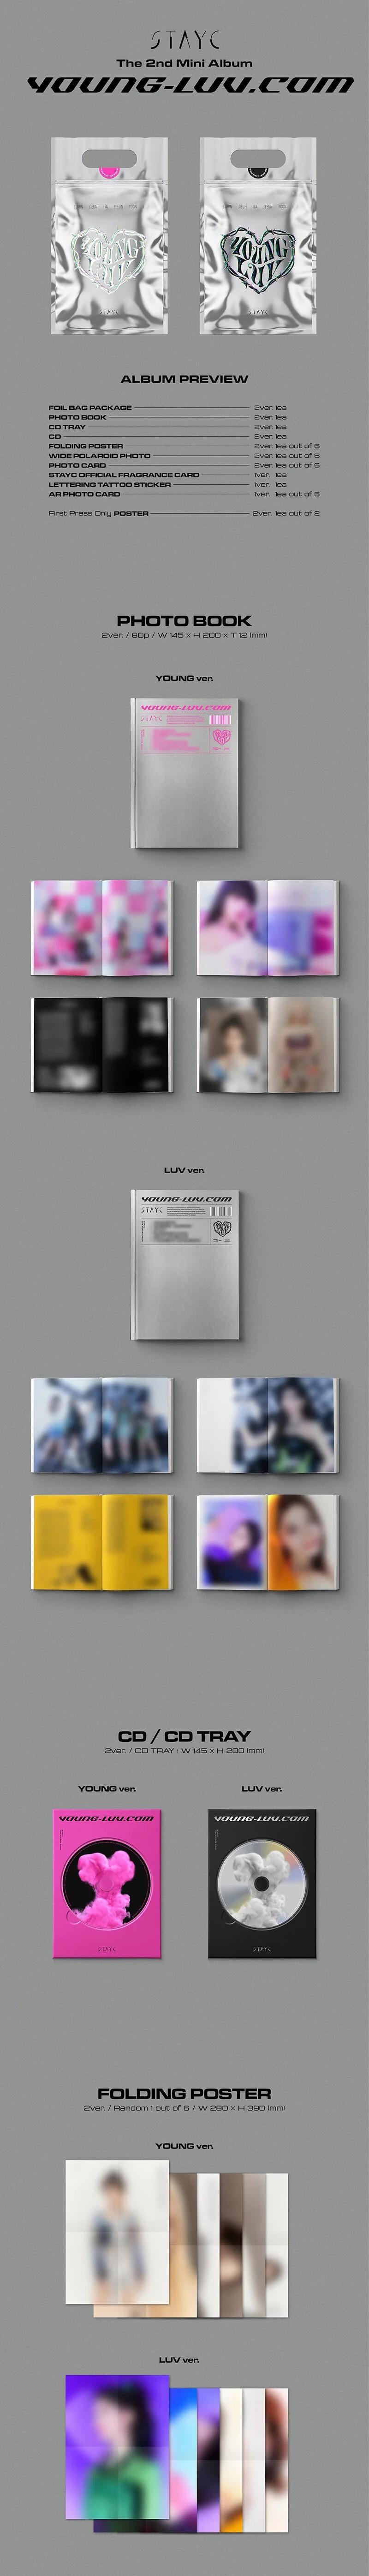 K-Pop CD Stayc - 2nd Mini Album 'Young-Luv.Com'